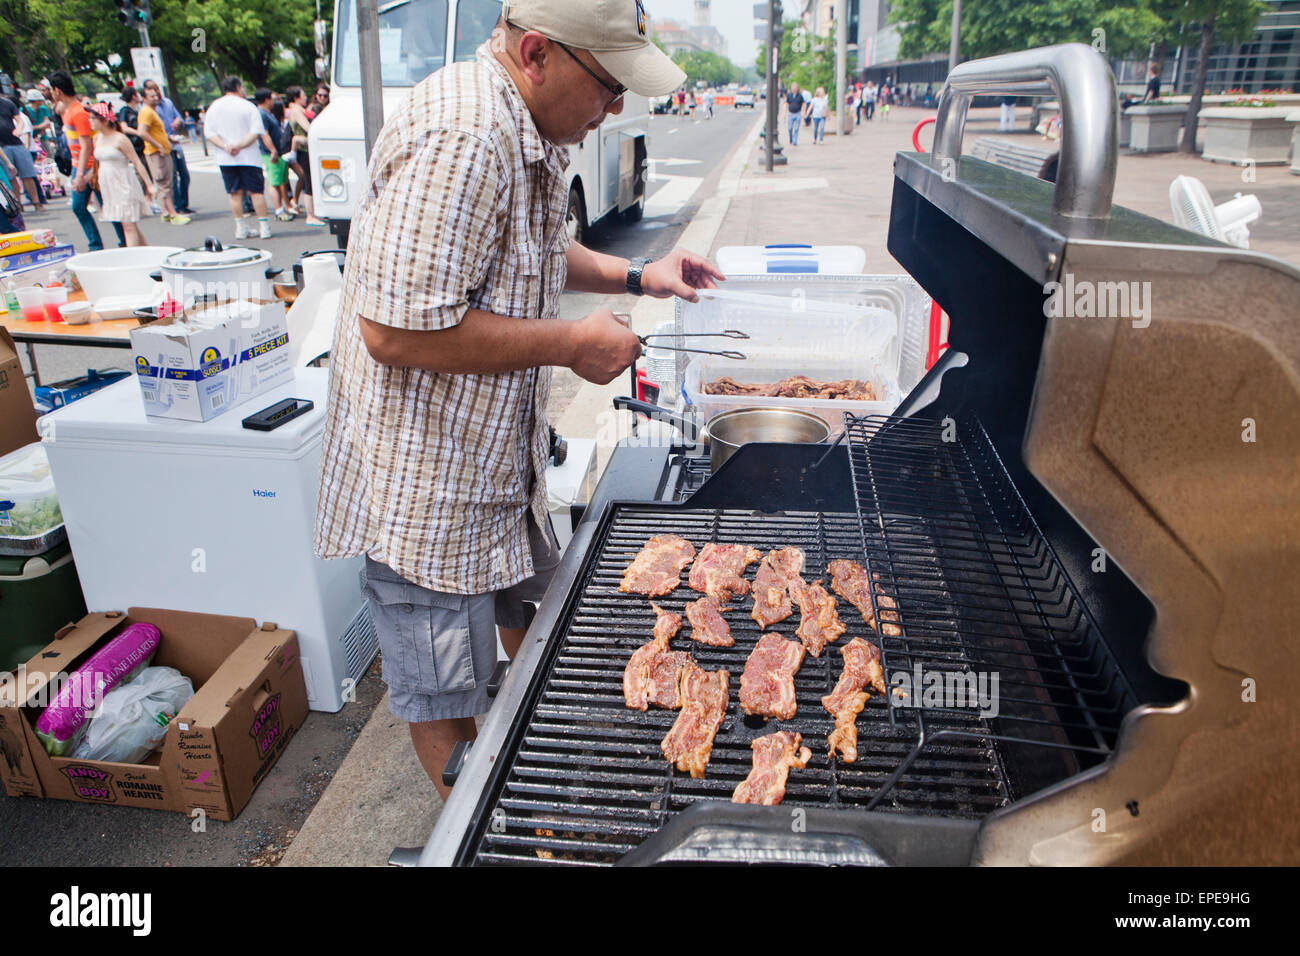 Man grilling Korean short ribs (Kalbi) at an outdoor event - USA Stock Photo